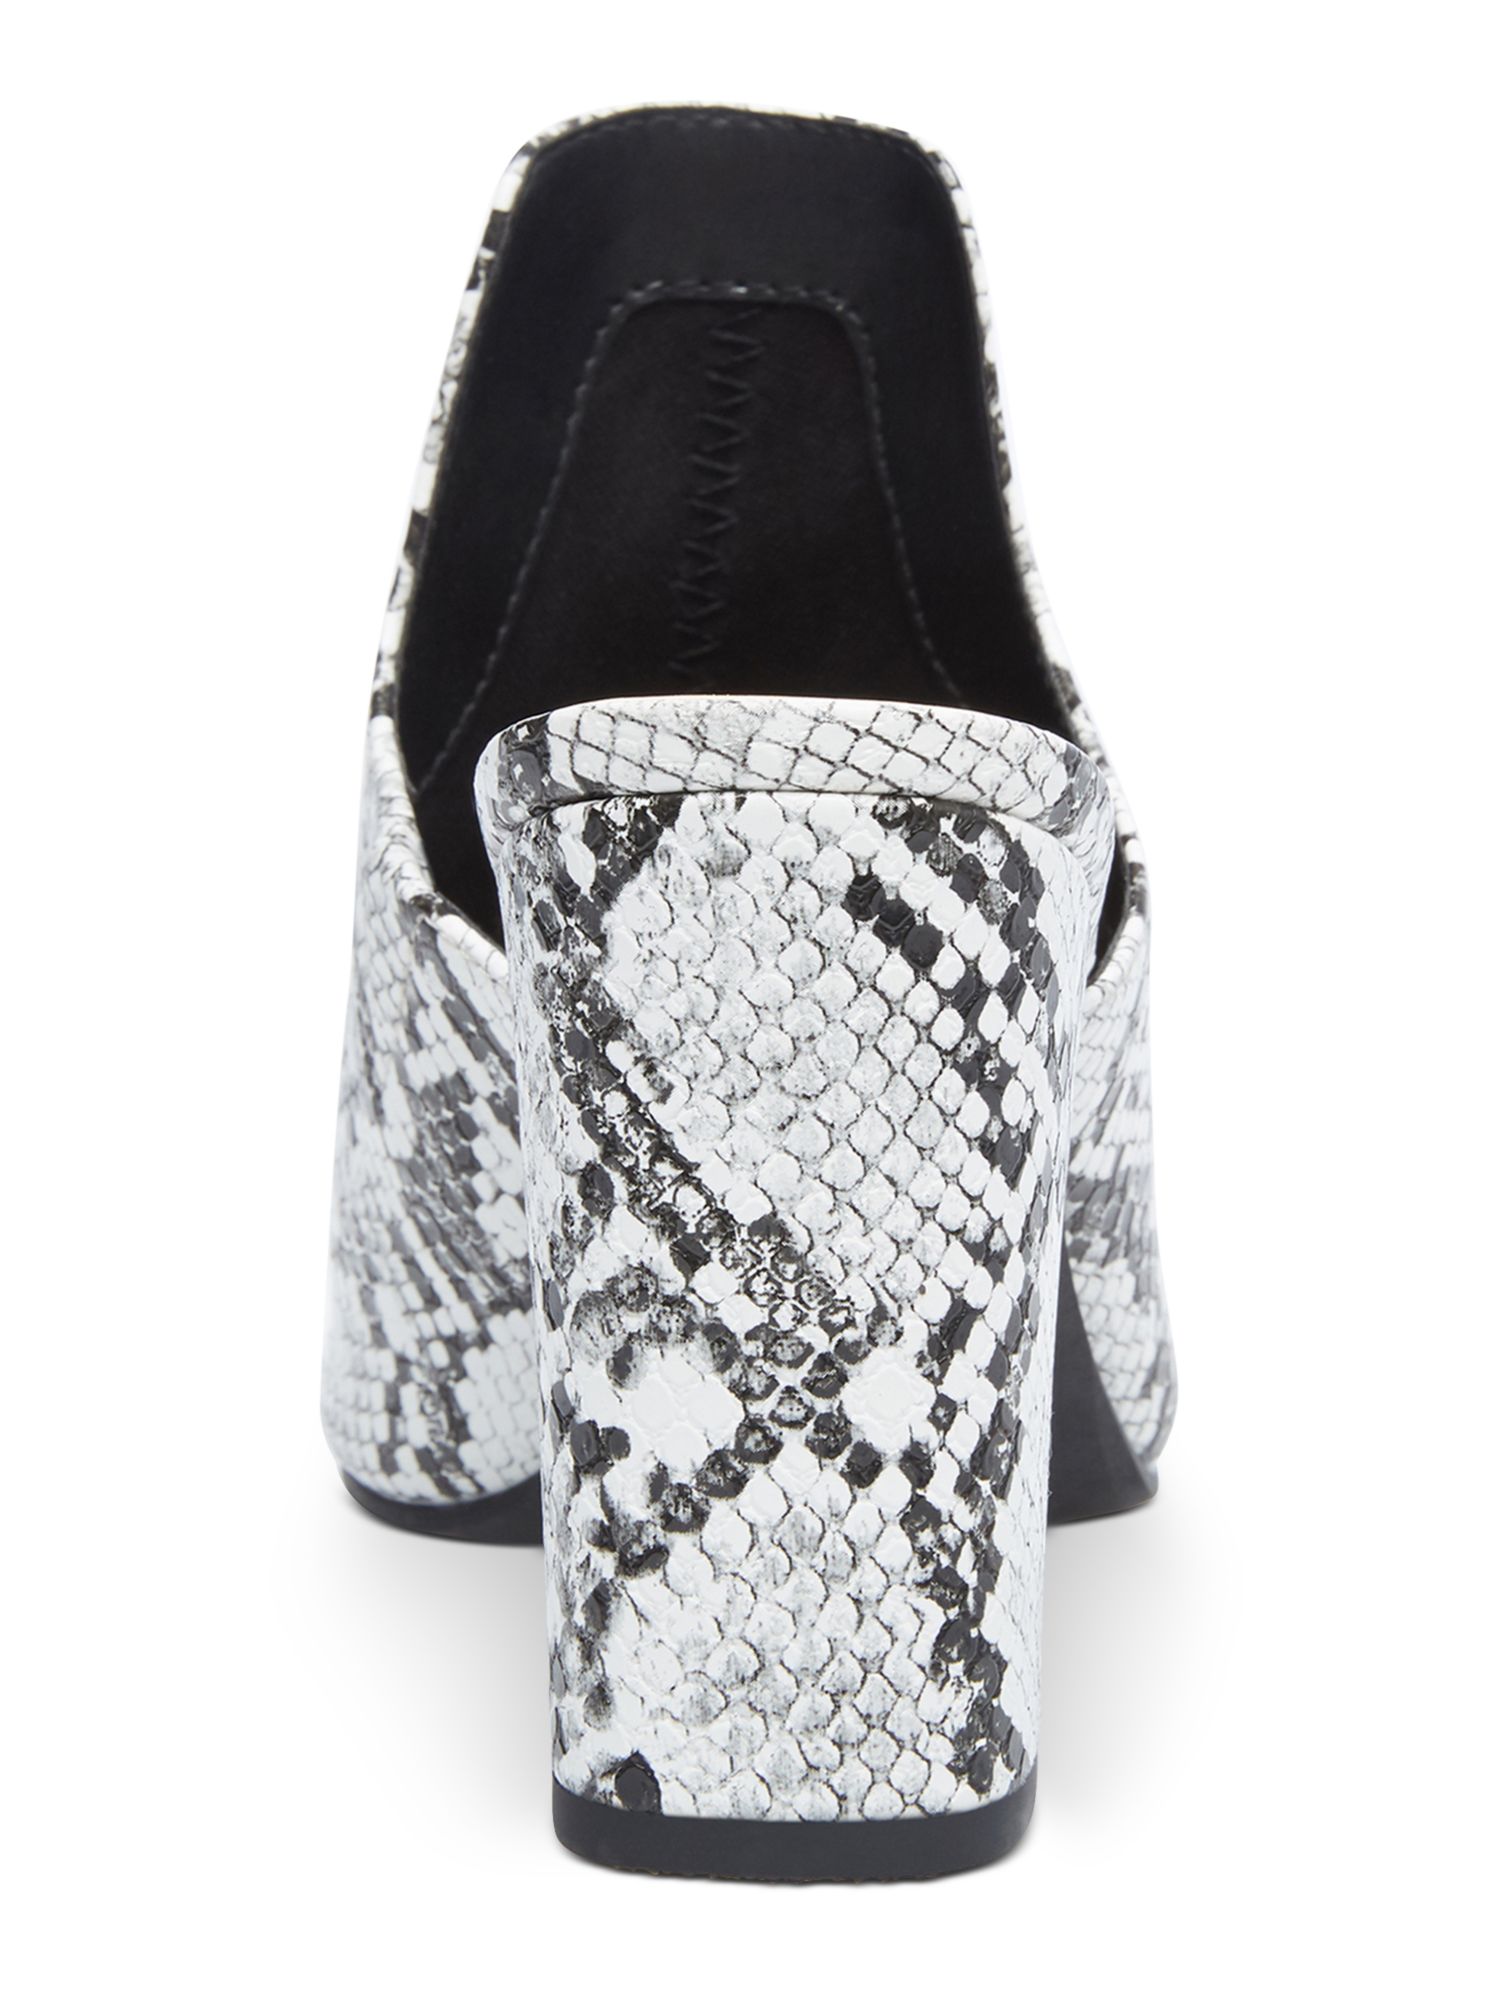 WILD PAIR Womens Black Snake Print Comfort Carlita Pointed Toe Block Heel Slip On Heeled Mules Shoes 7 M